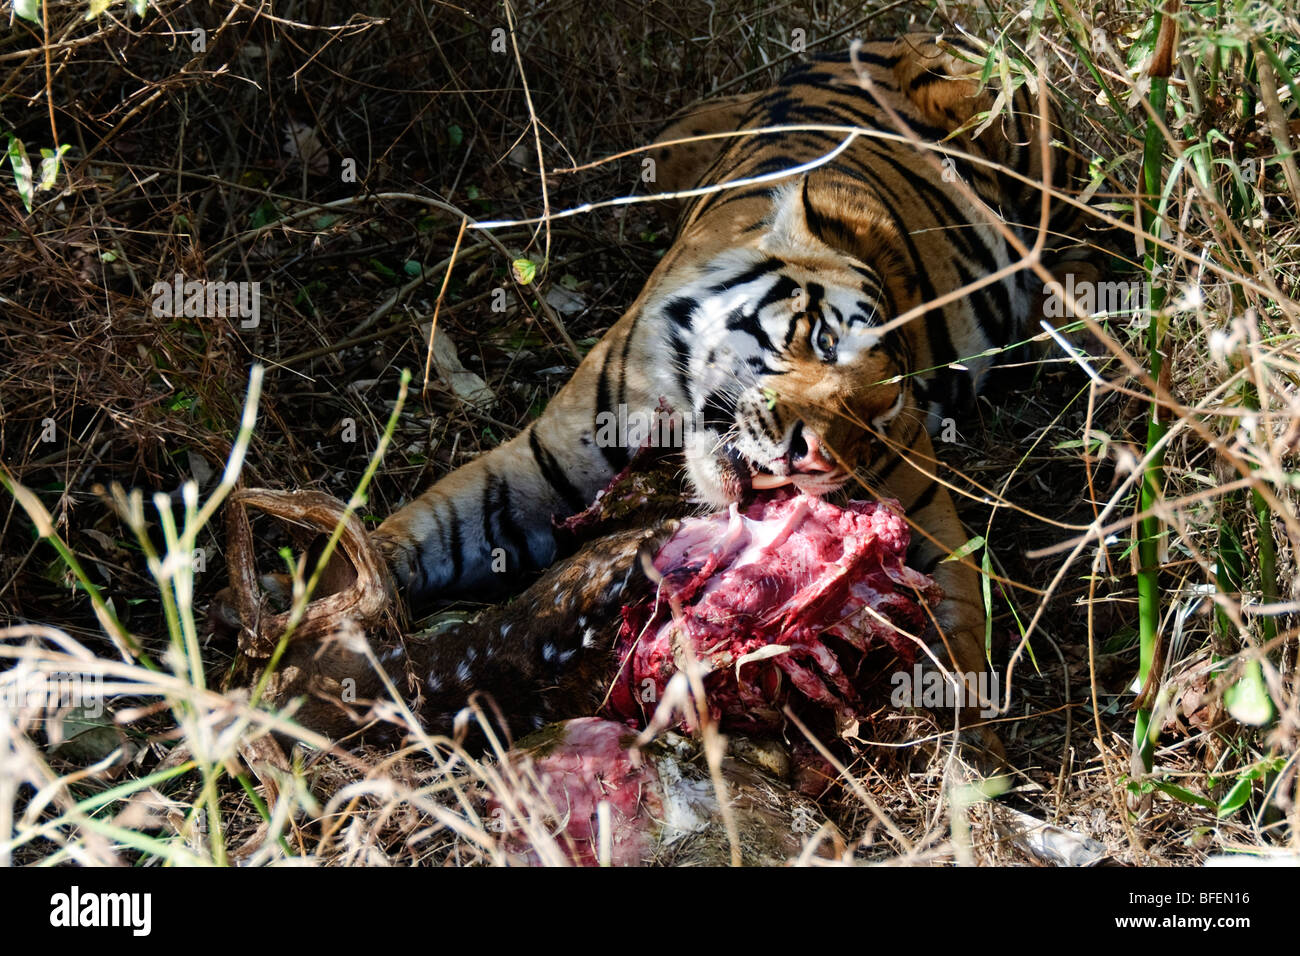 Tiger eating Prey in Kahana India's National park Stock Photo